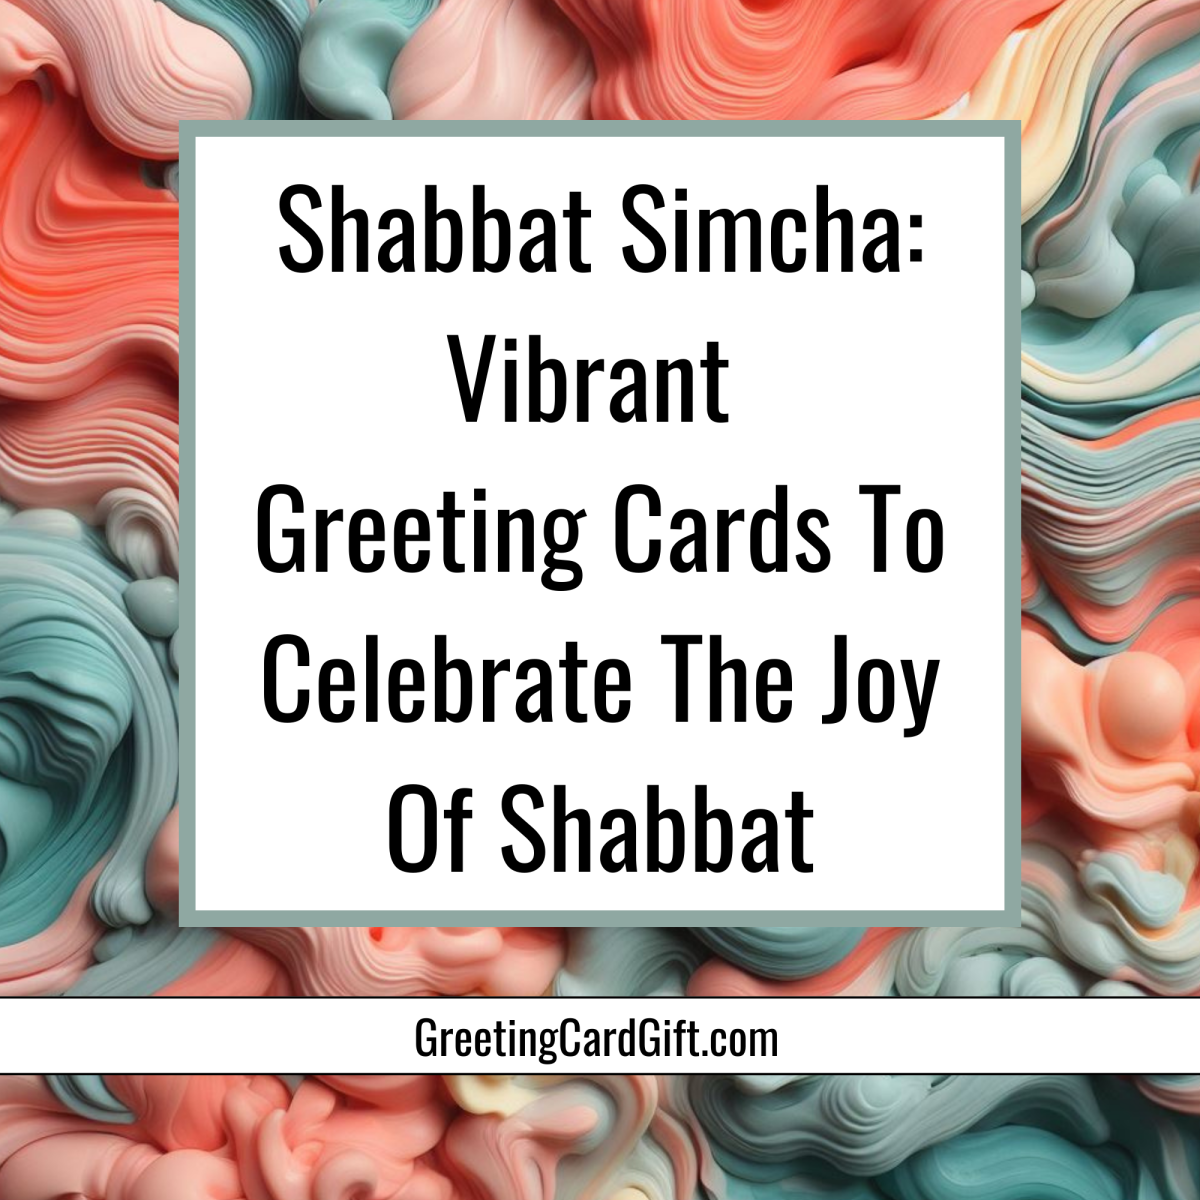 Shabbat Simcha: Vibrant Greeting Cards To Celebrate The Joy Of Shabbat